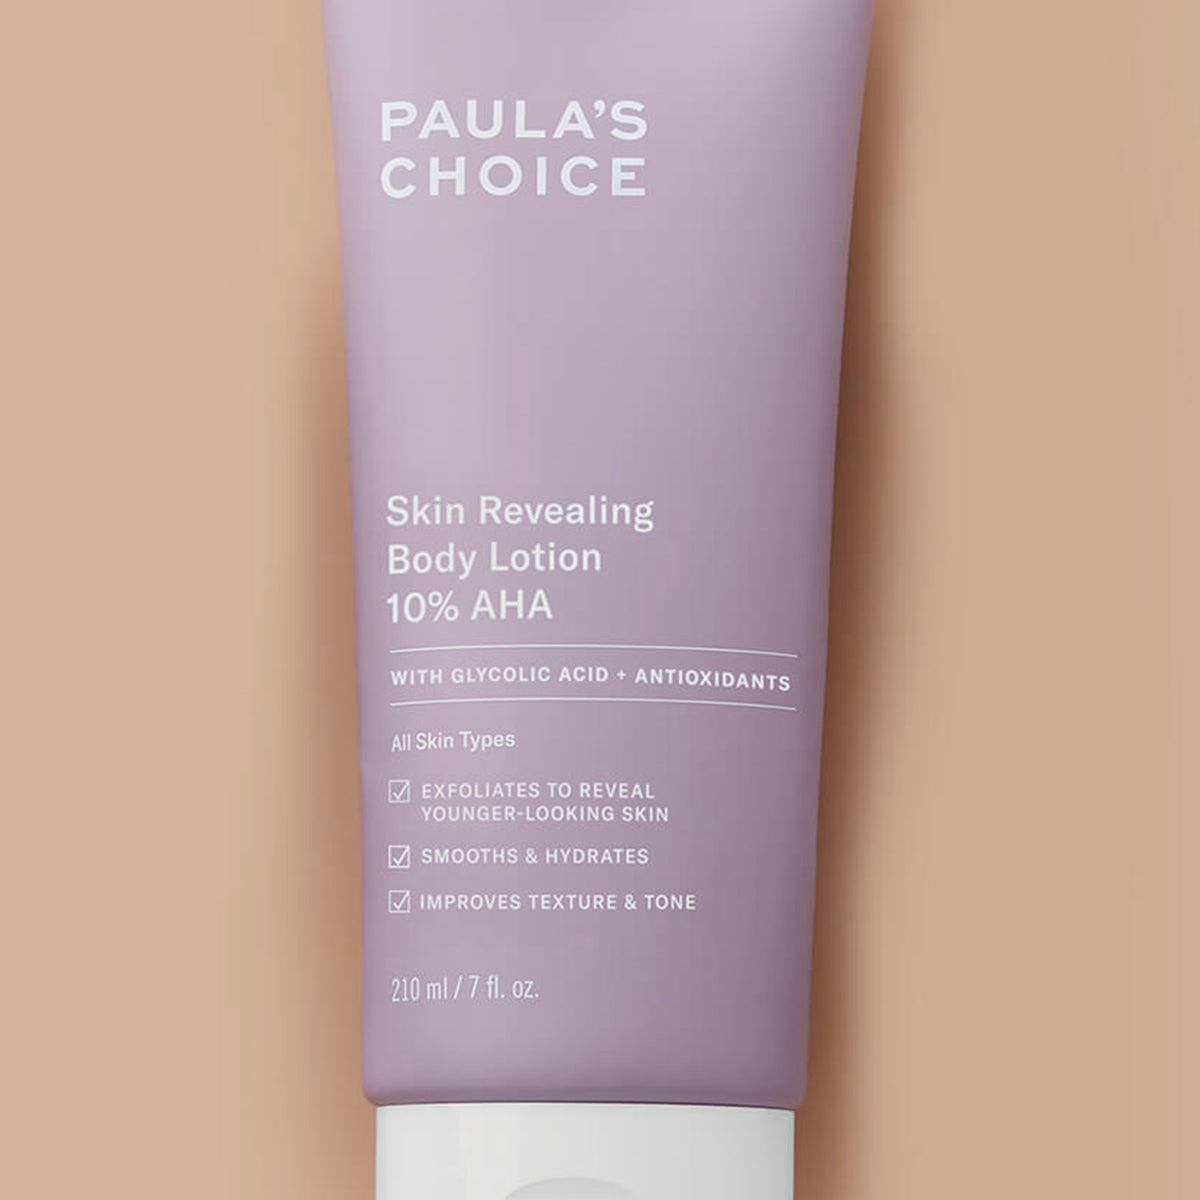 Paula's Choice | Skin Revealing Body Lotion 10% AHA